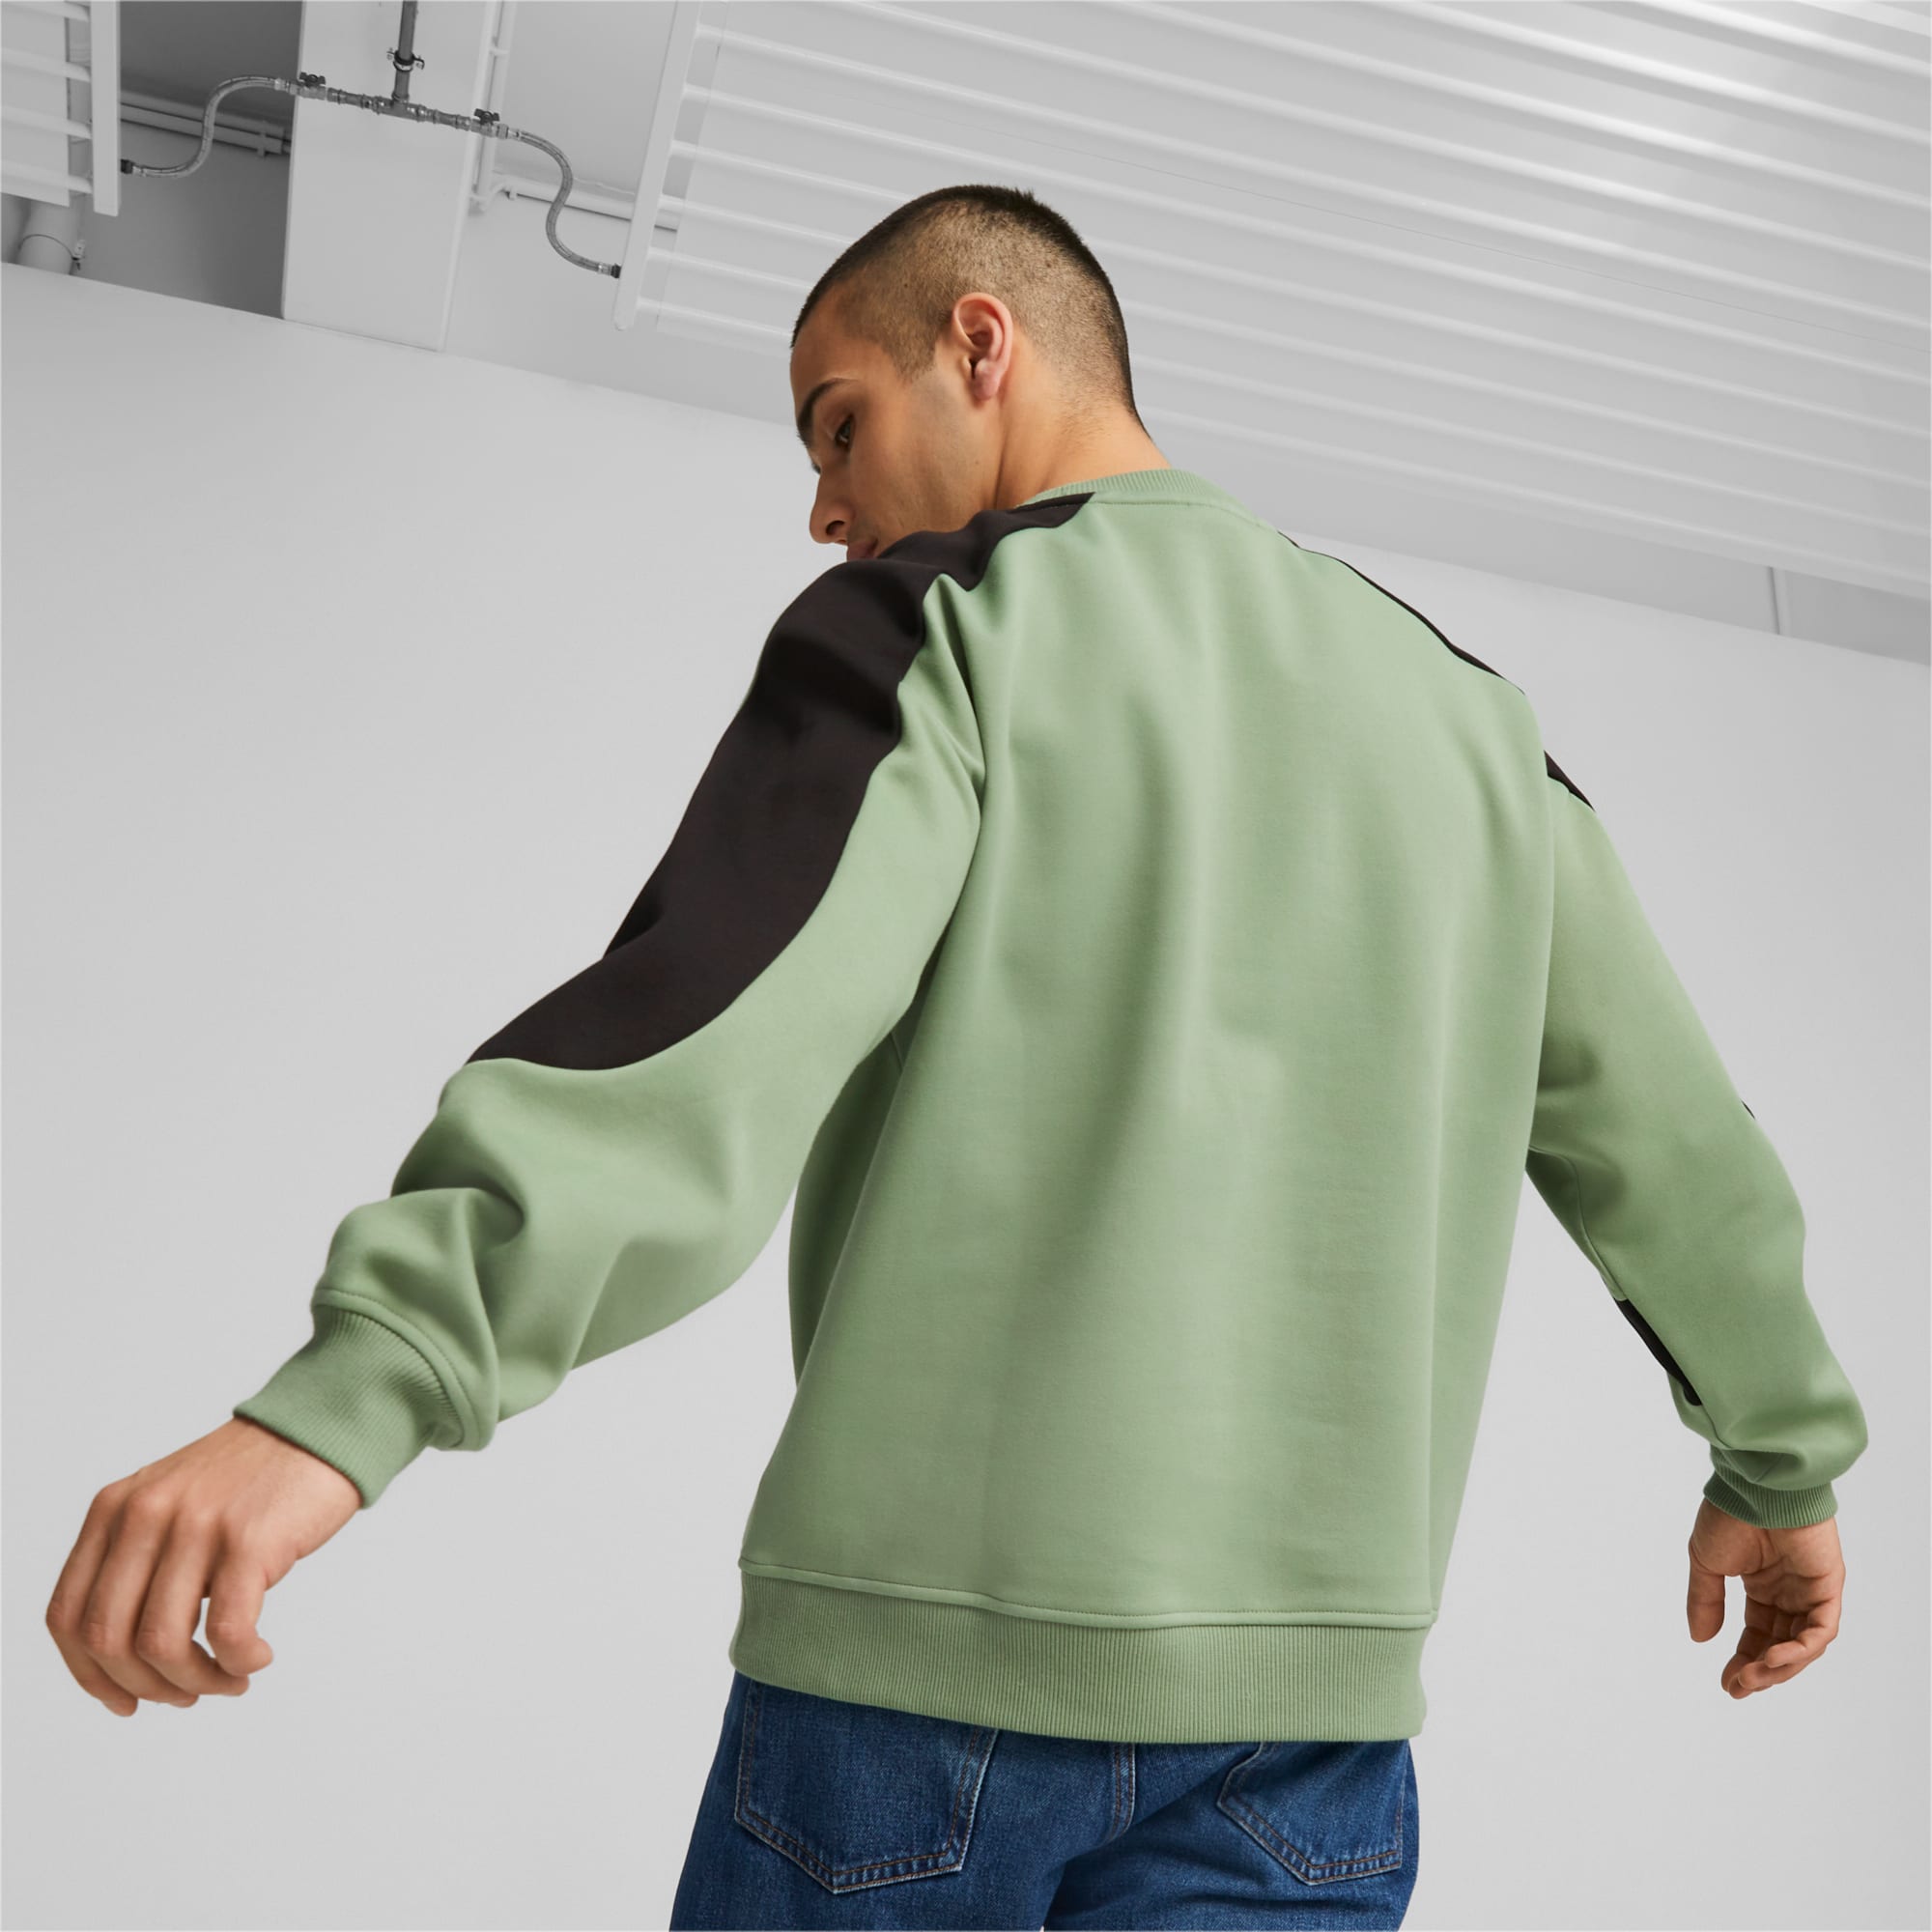 PUMA Mercedes-Amg Men's Sweatshirt, Dusty Green